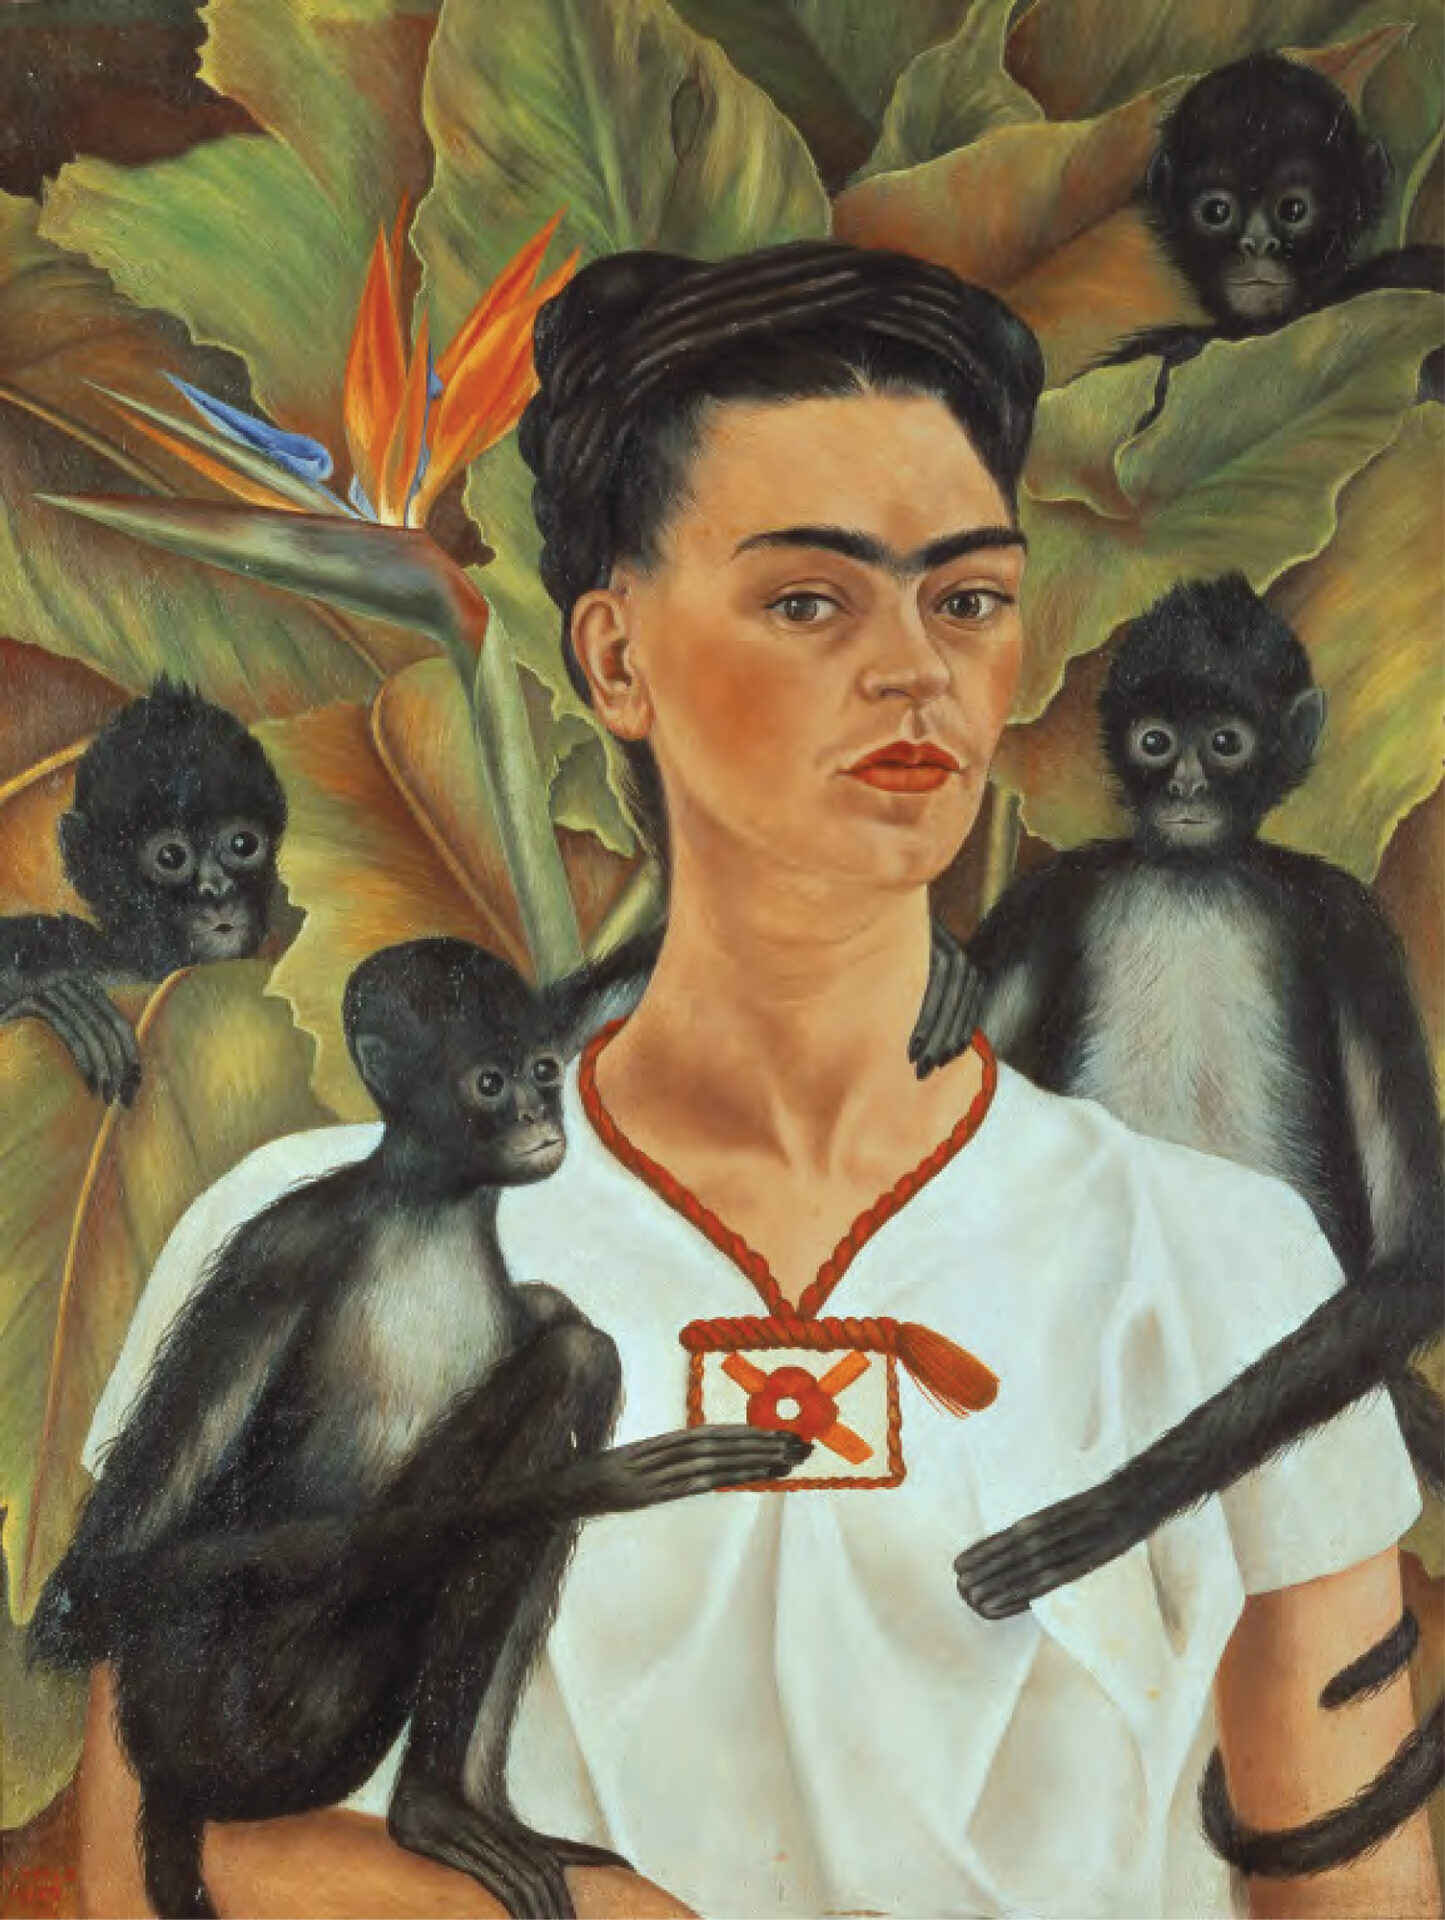 A painting of Frida Kahlo and monkeys by Frida Kahlo.